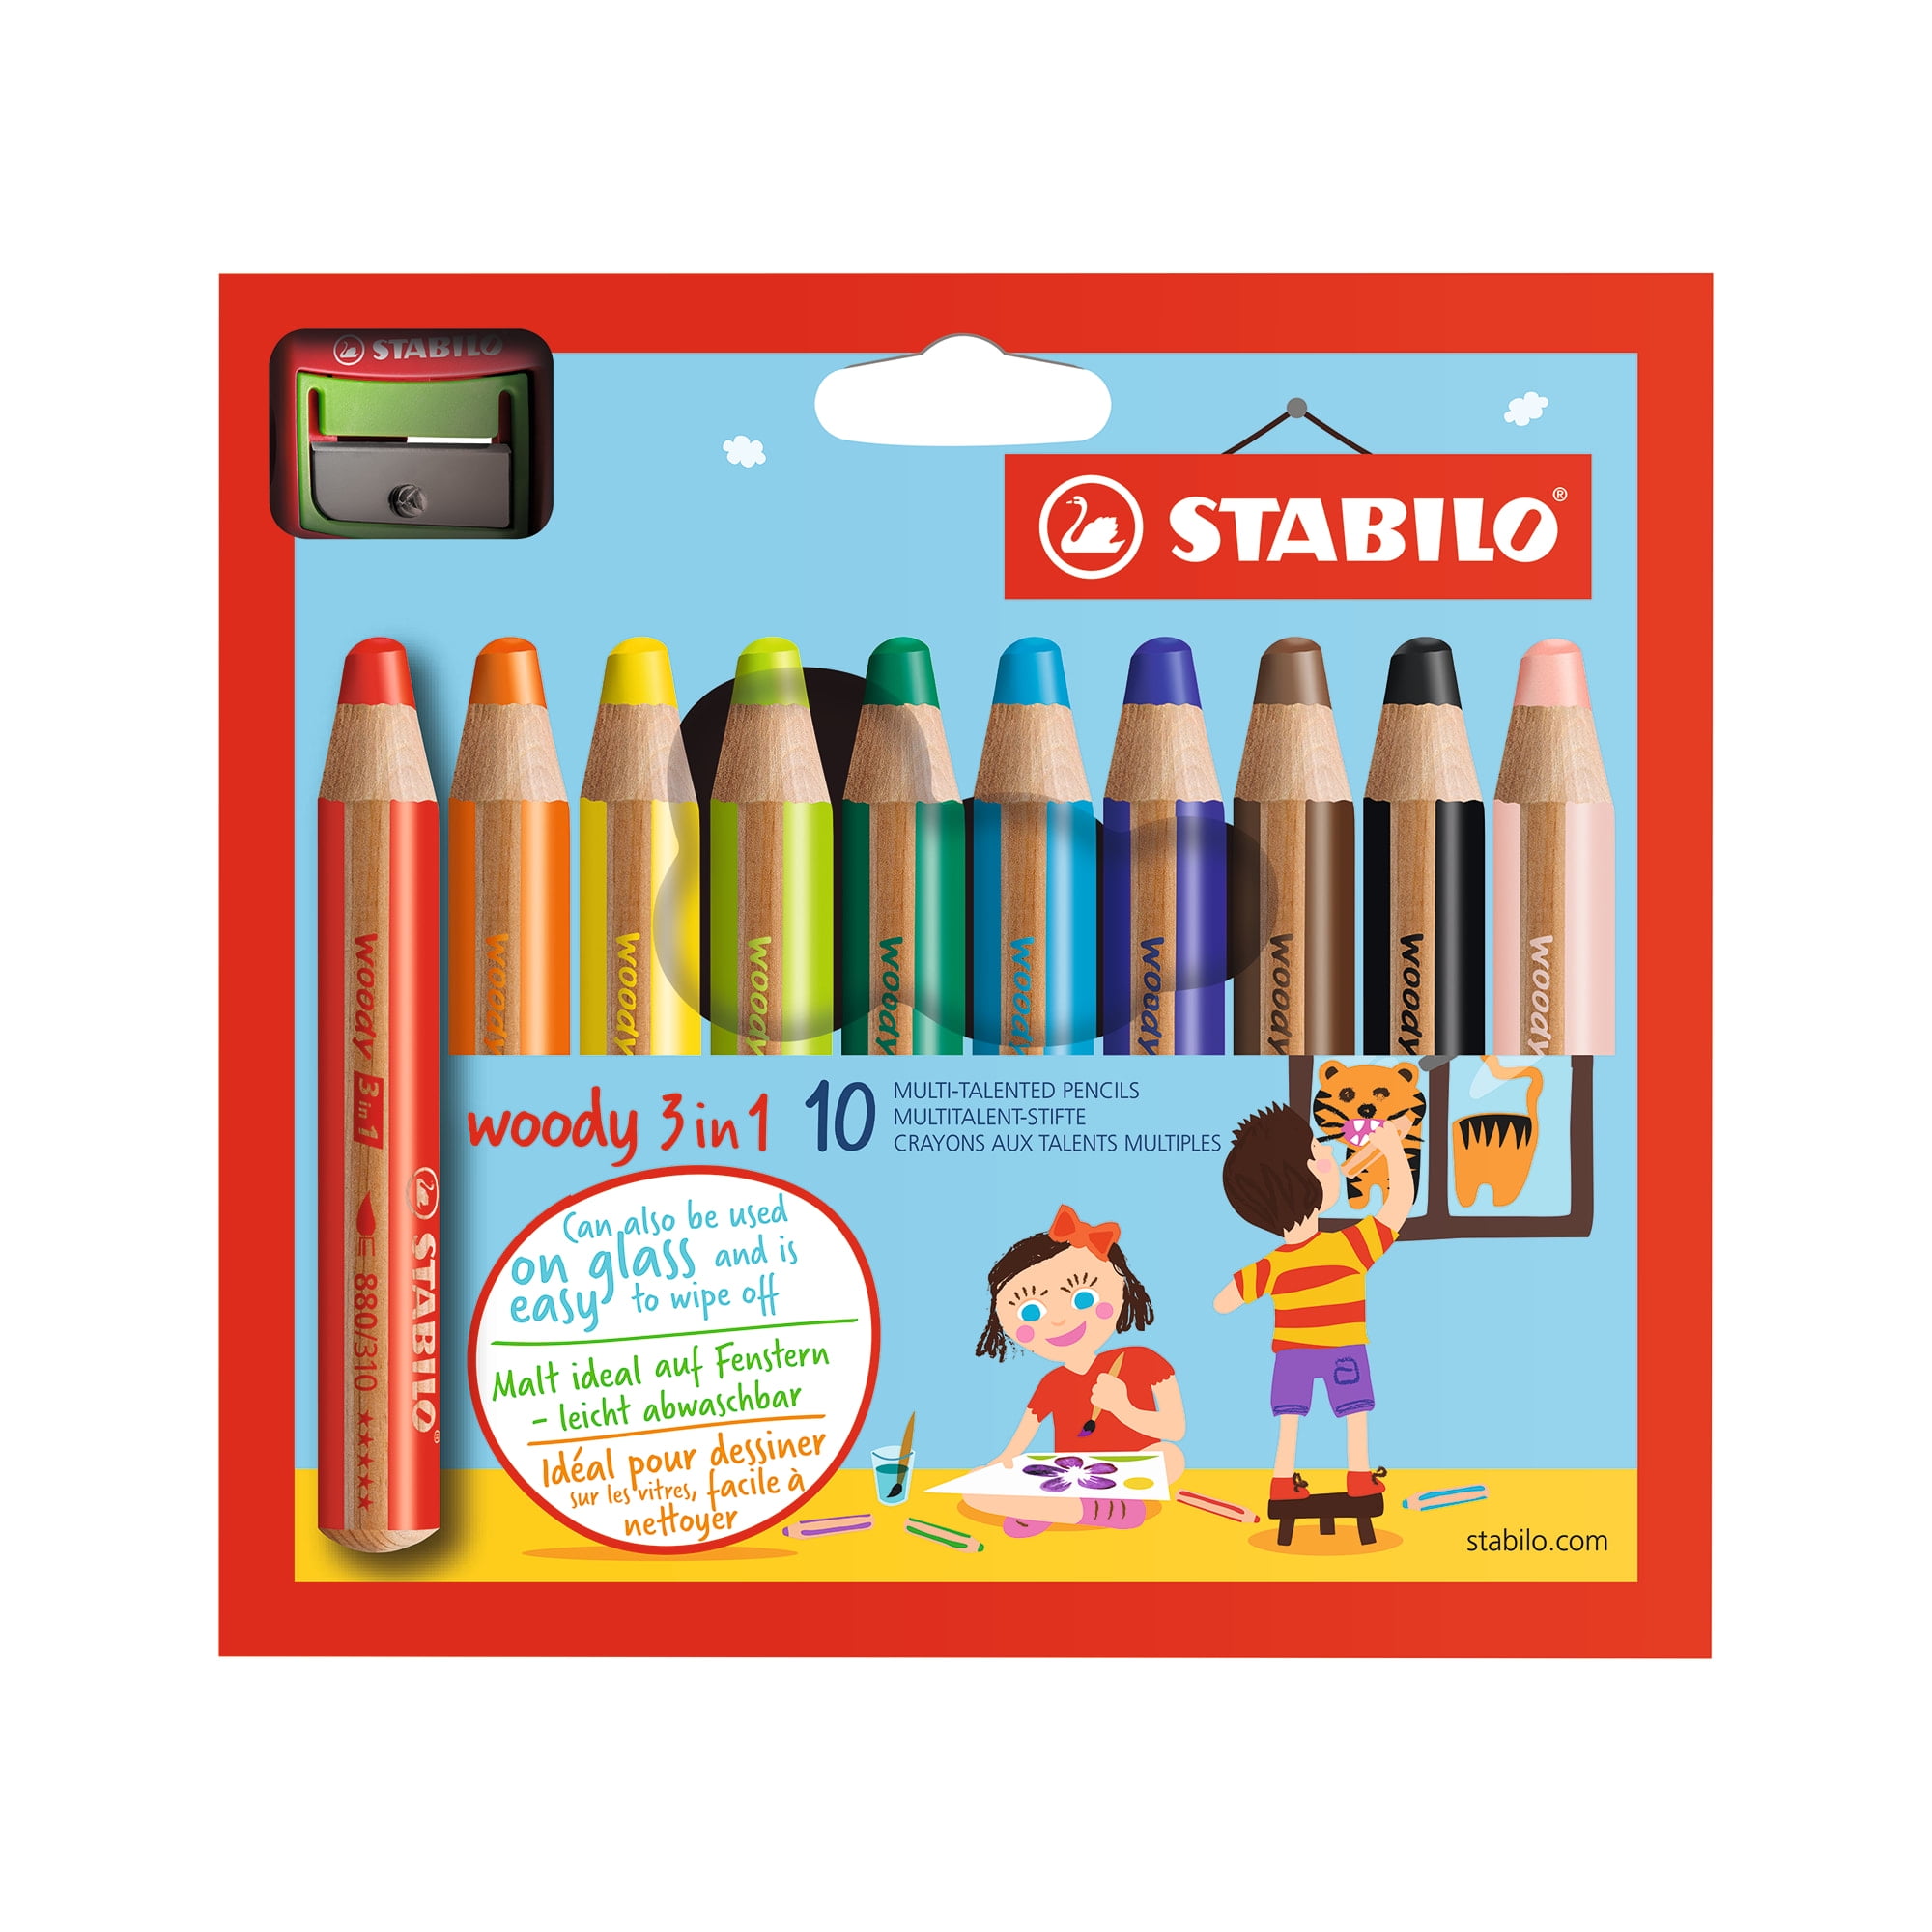 Woody Stabilo Pencil